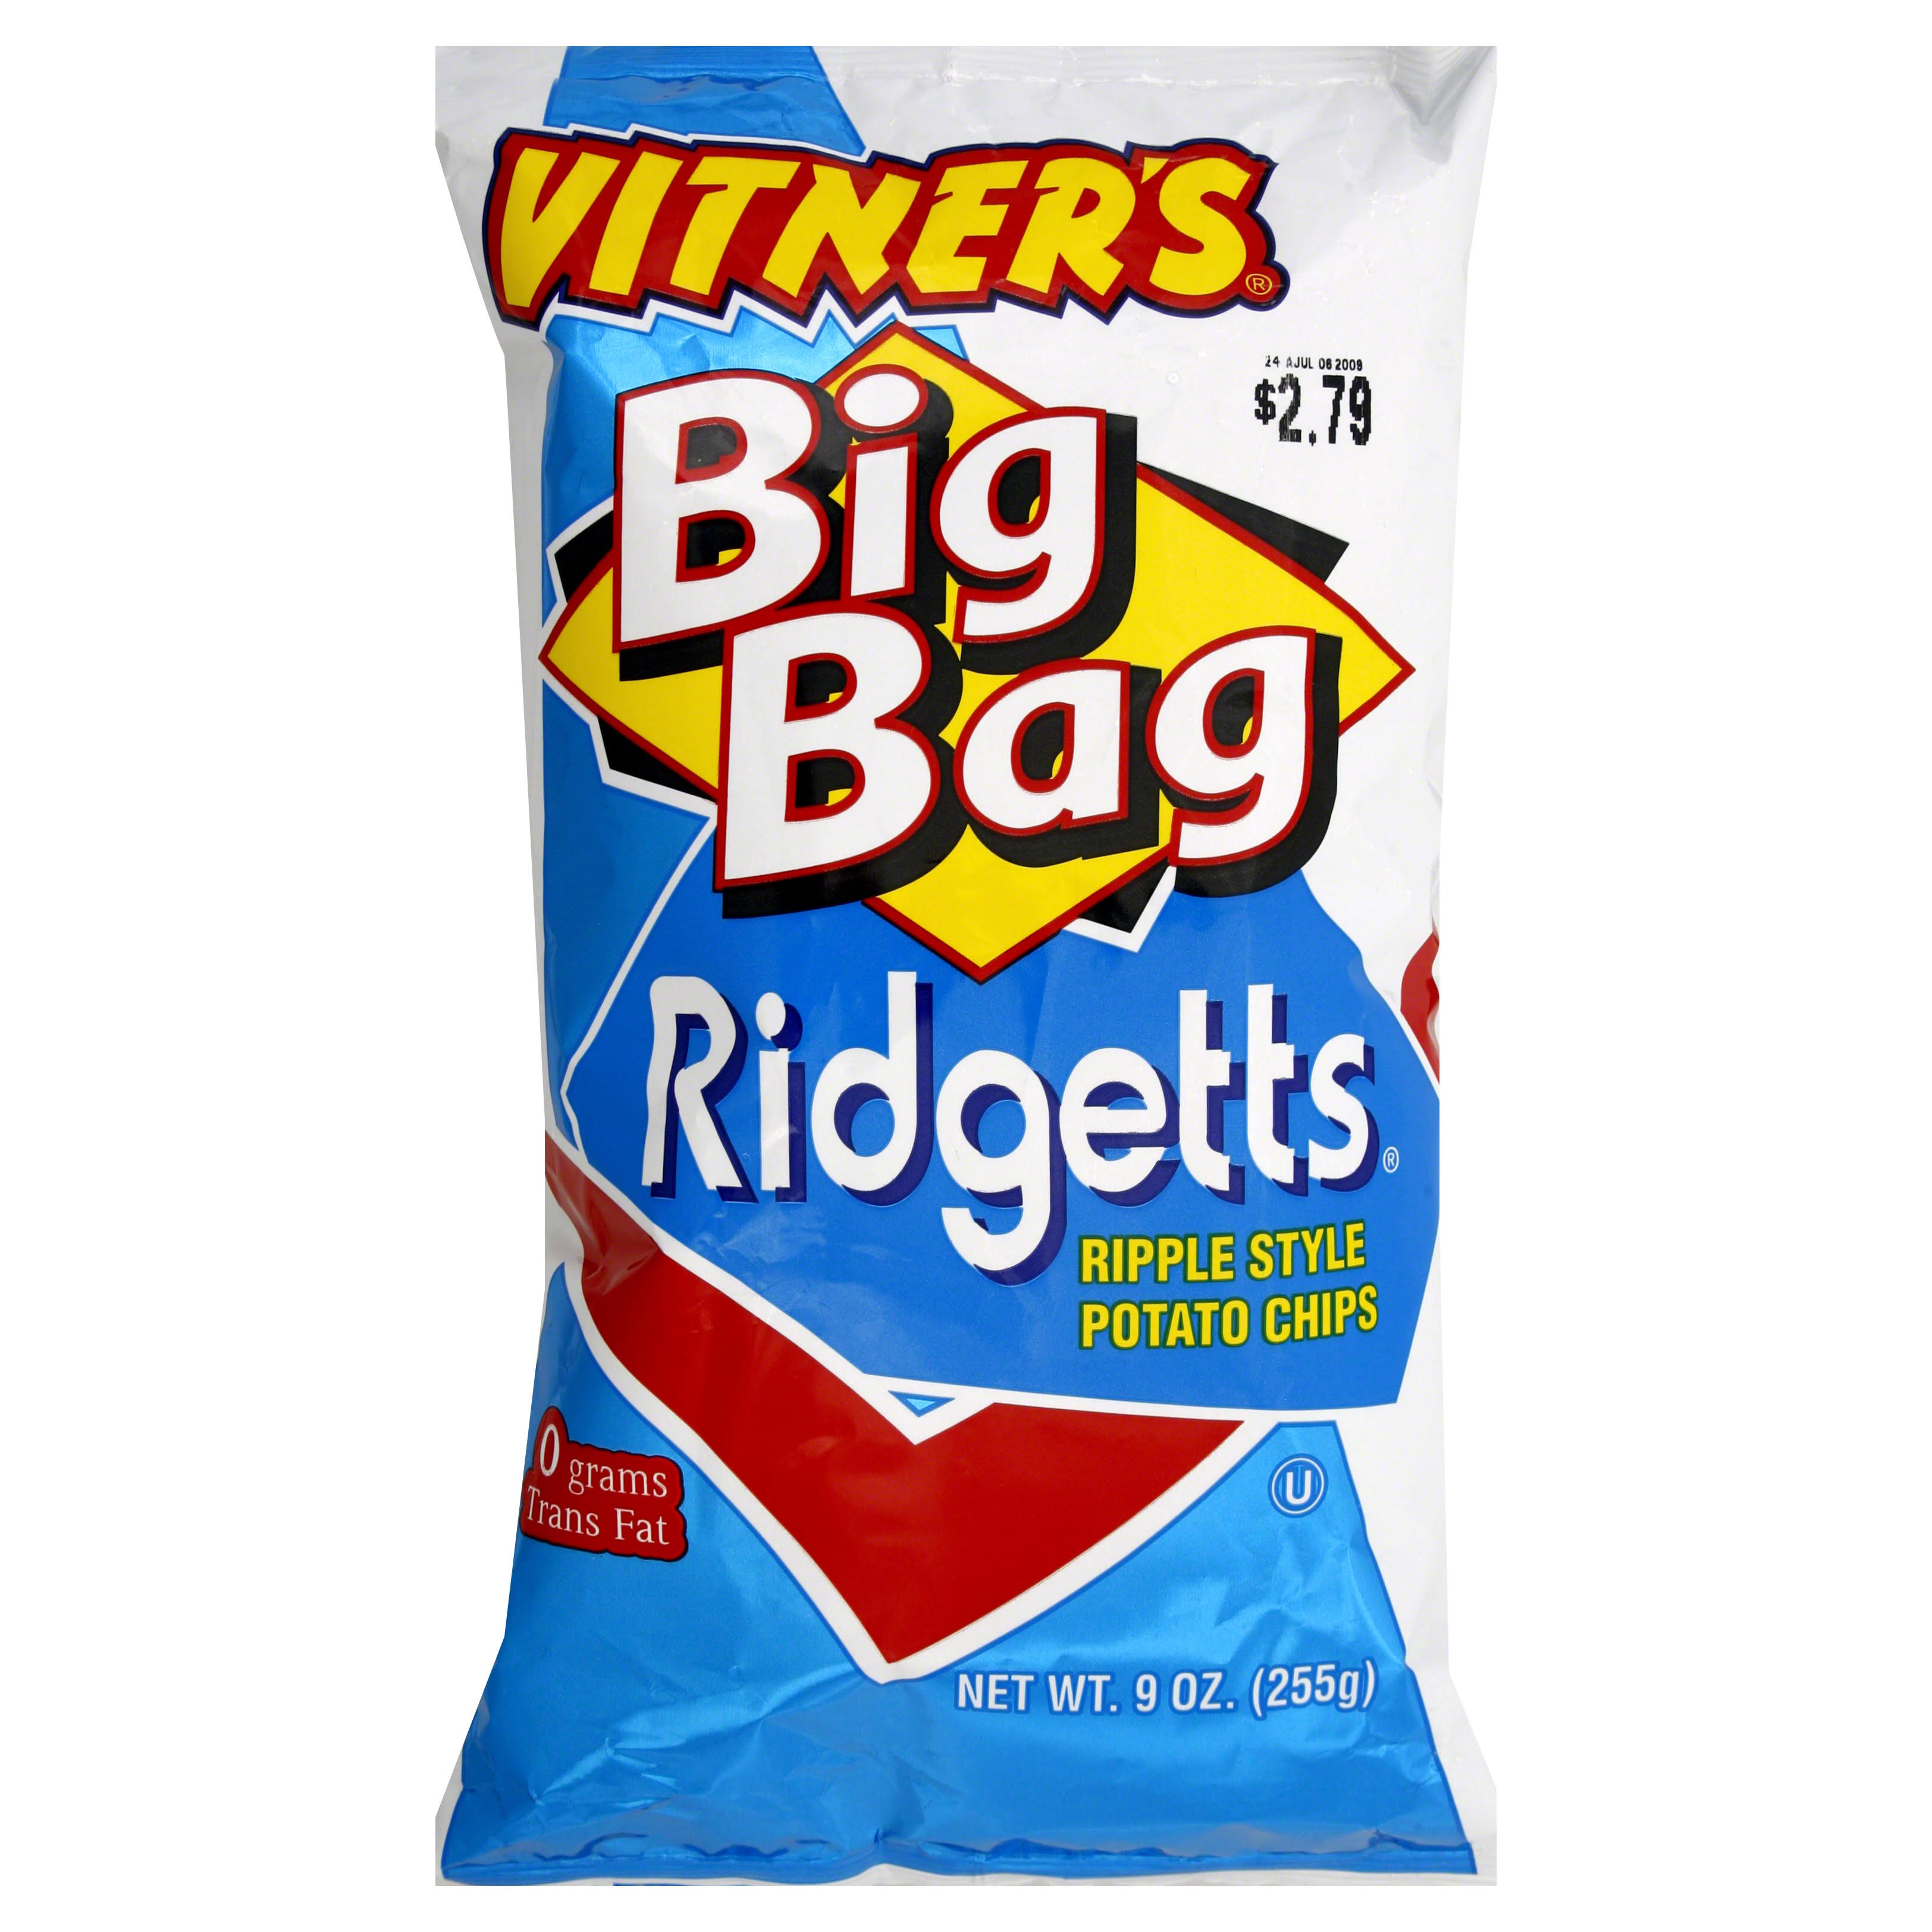 Vitner's Ridgetts Potato Chips